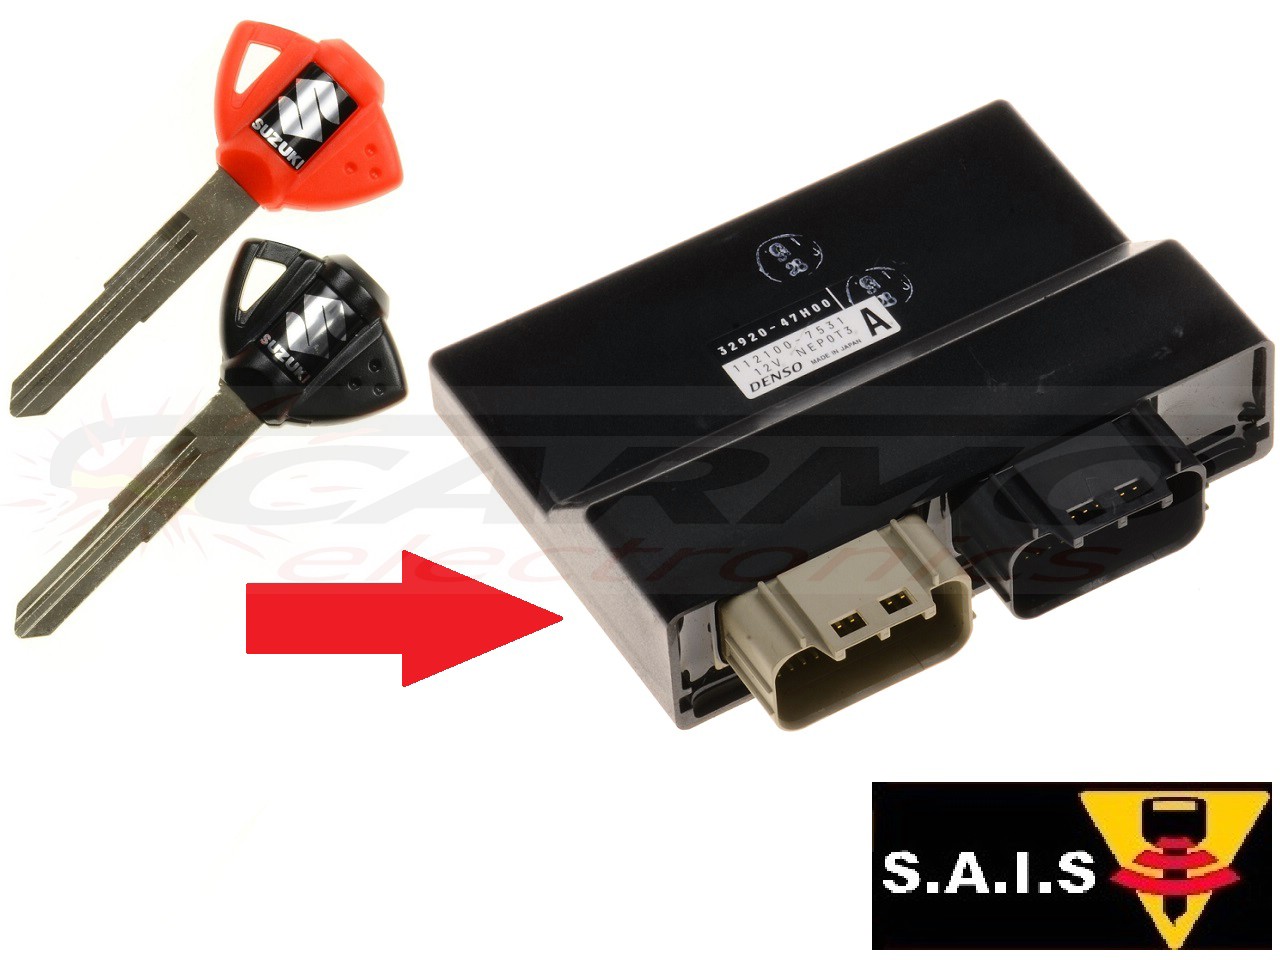 Suzuki 2x SAIS sleutel programmeren → motorfiets ECU - Clique na Imagem para Fechar